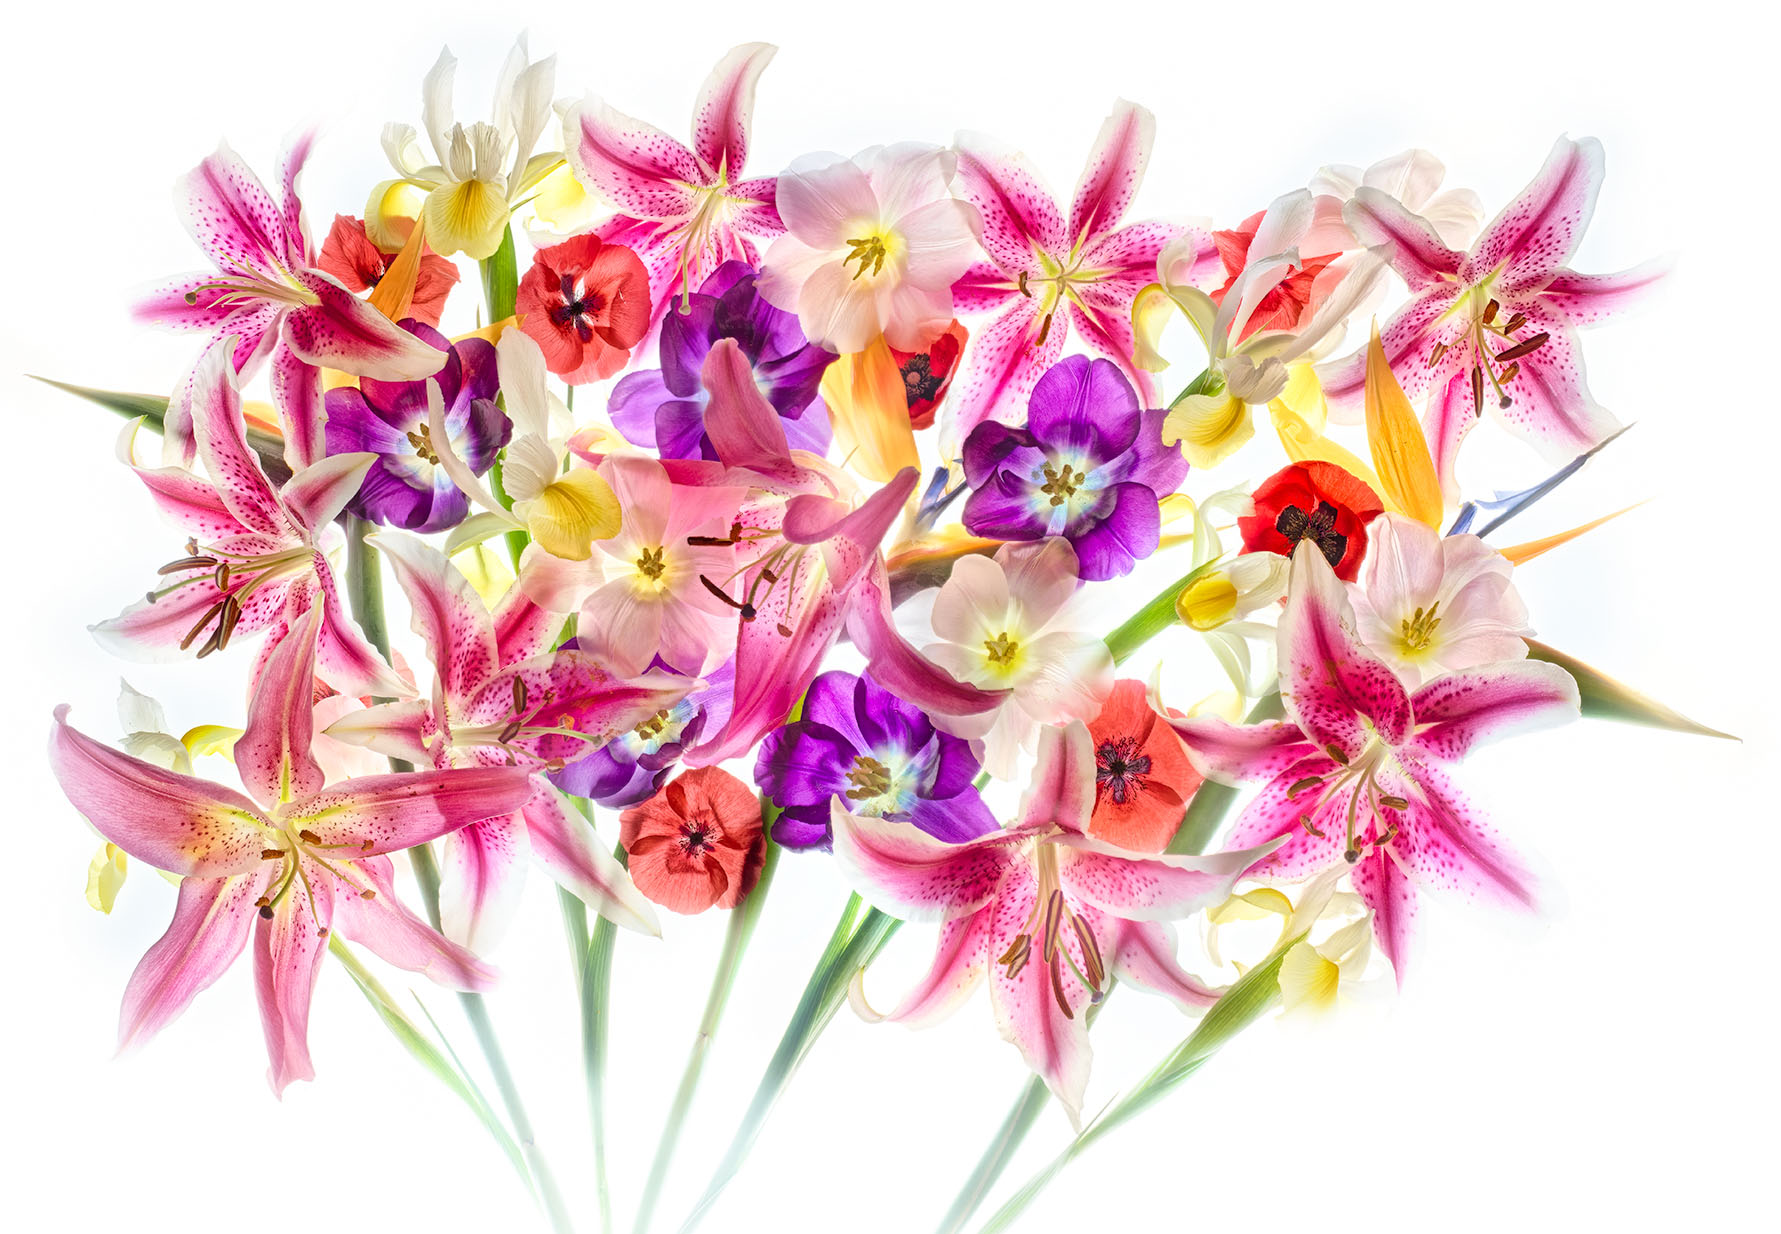 Flowers as a Group © Harold Davis